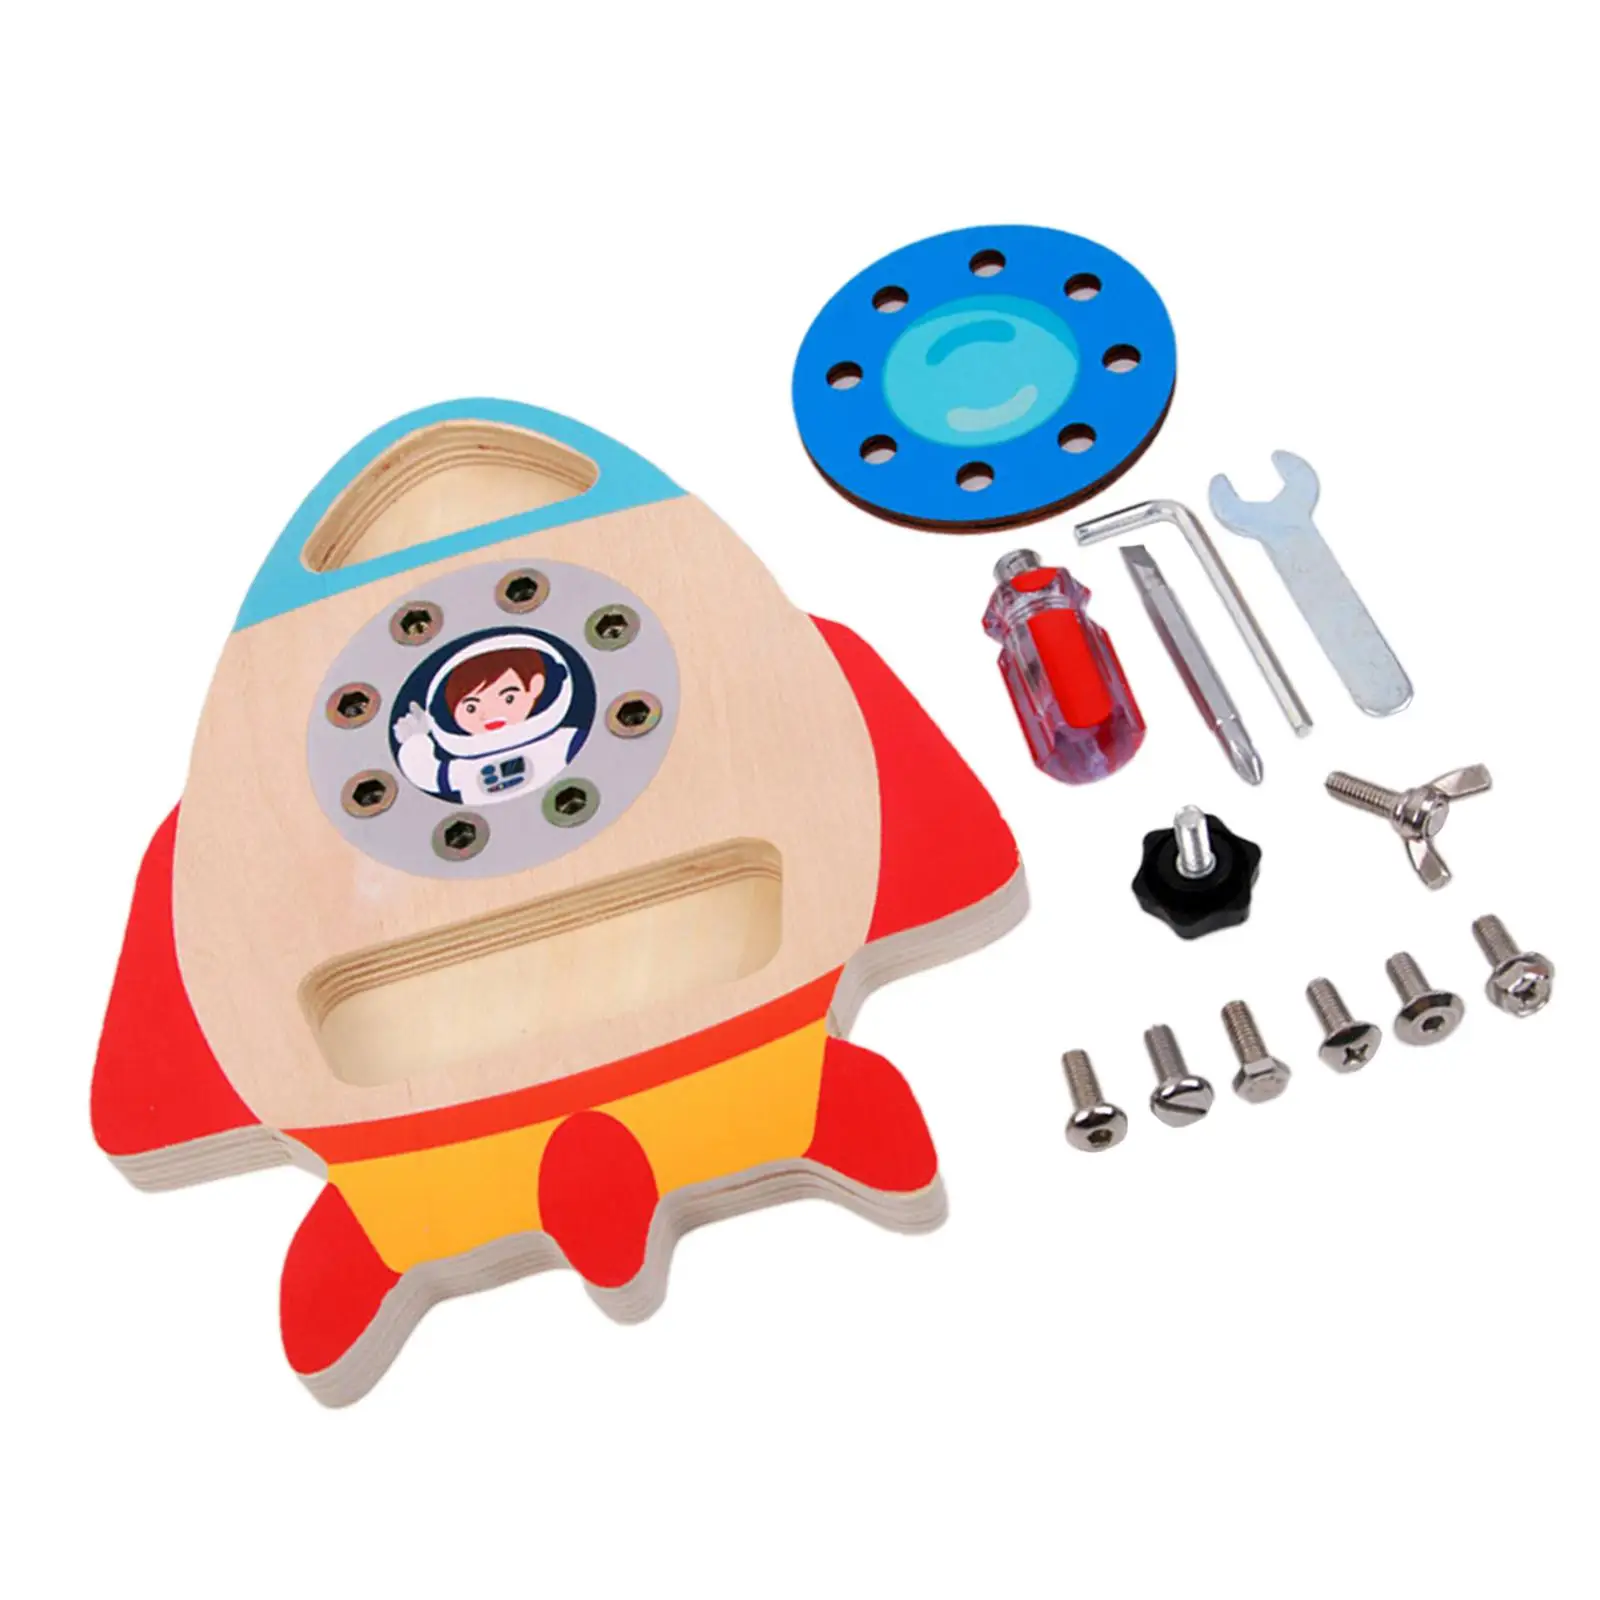 Rocket Shaped Screwdriver Board Set Early Leaning Education Toy Screw Building Set Develop Fine Motor Skills for Children Boy